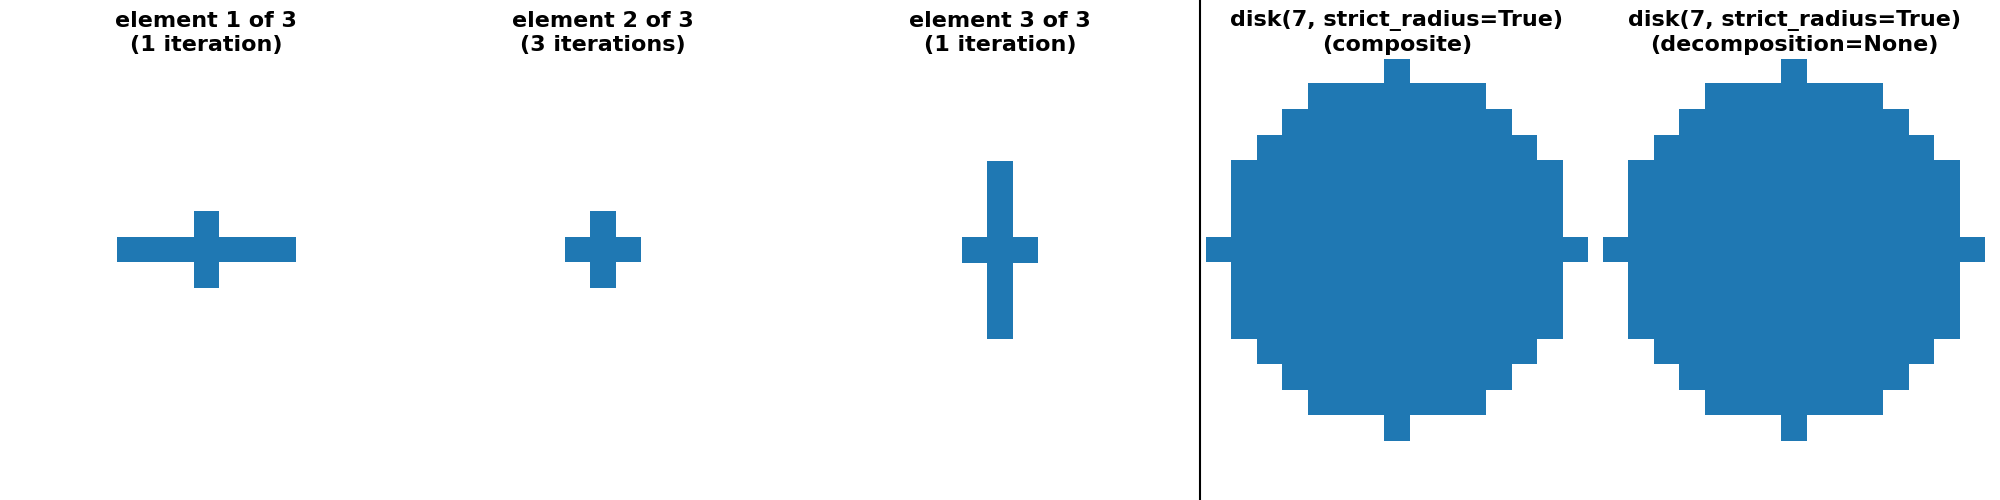 disk(7, strict_radius=True) (decomposition=None), disk(7, strict_radius=True) (composite), element 1 of 3 (1 iteration), element 2 of 3 (3 iterations), element 3 of 3 (1 iteration)